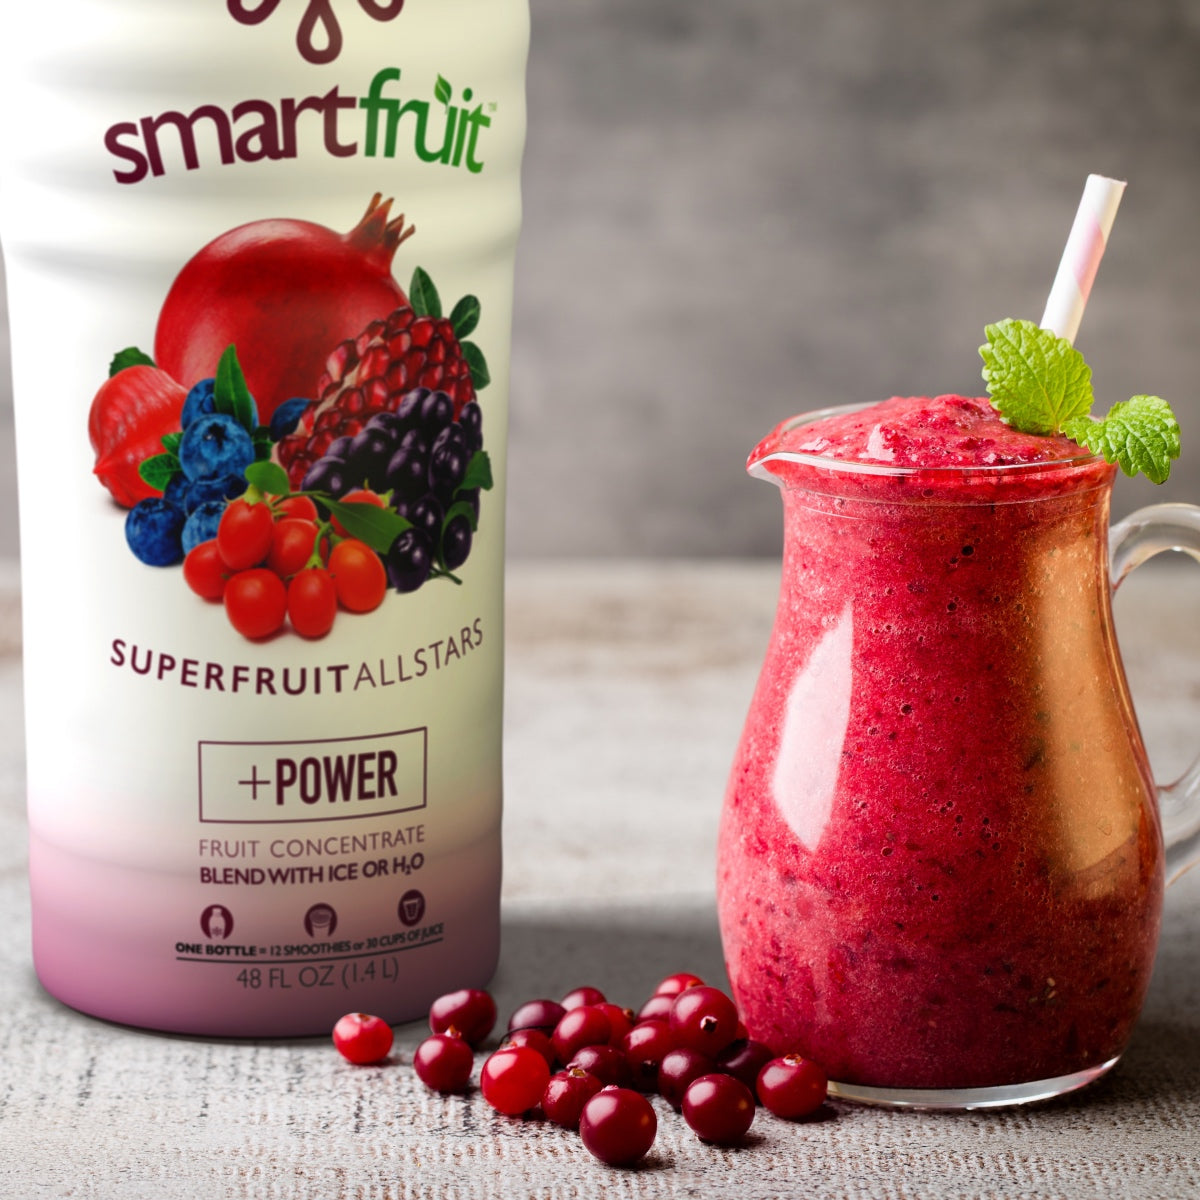 SmartFruit - 100% Real Fruit Puree: 48 fl. oz. Bottle: Superfruit All Stars